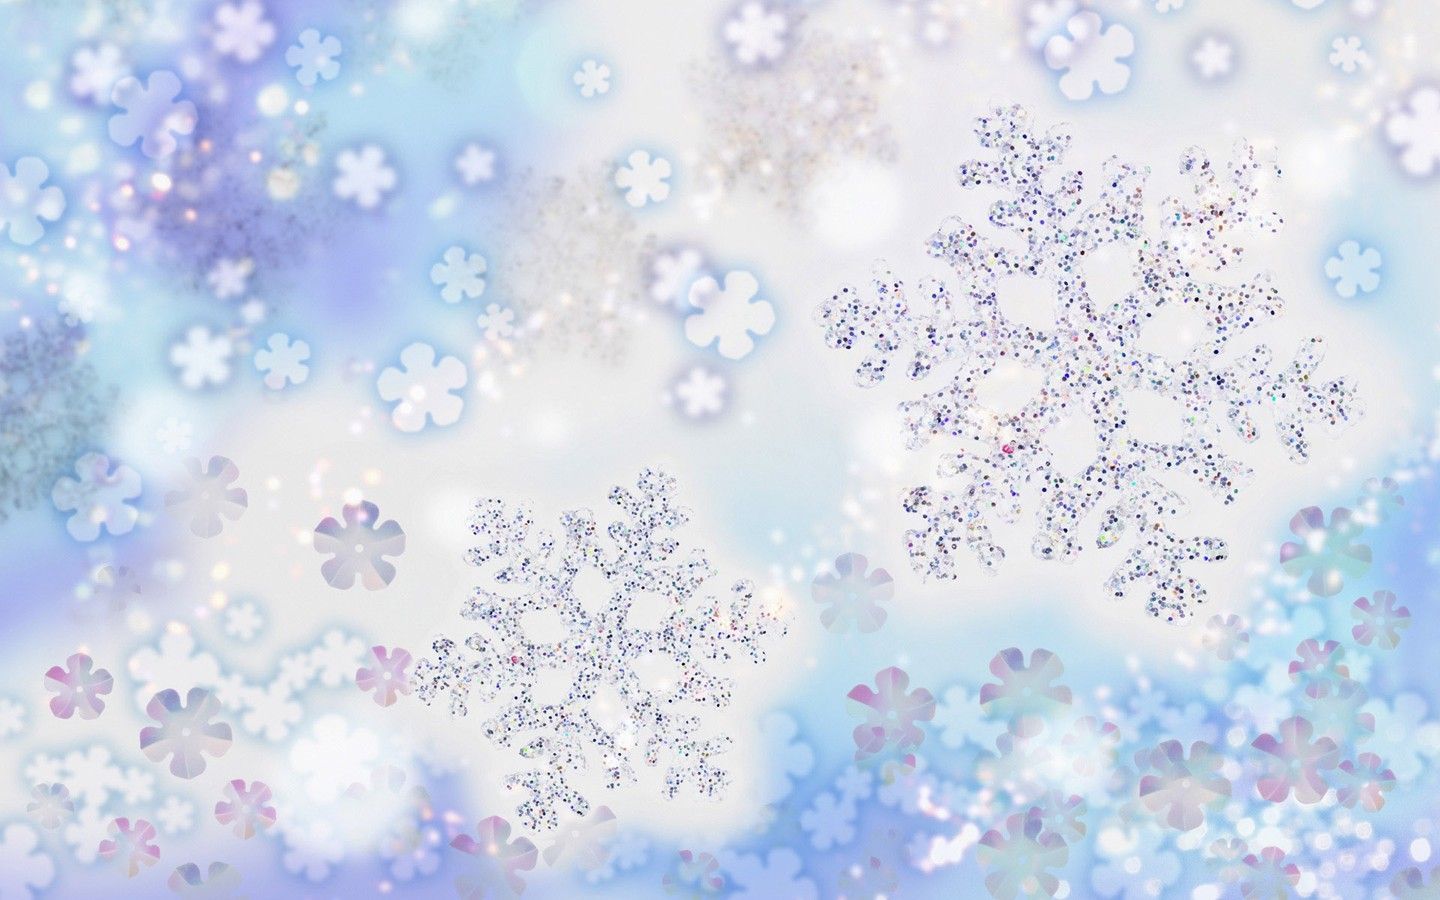 Winter Christmas Wallpaper Free. Winter wallpaper, Snowflake wallpaper, Free winter wallpaper